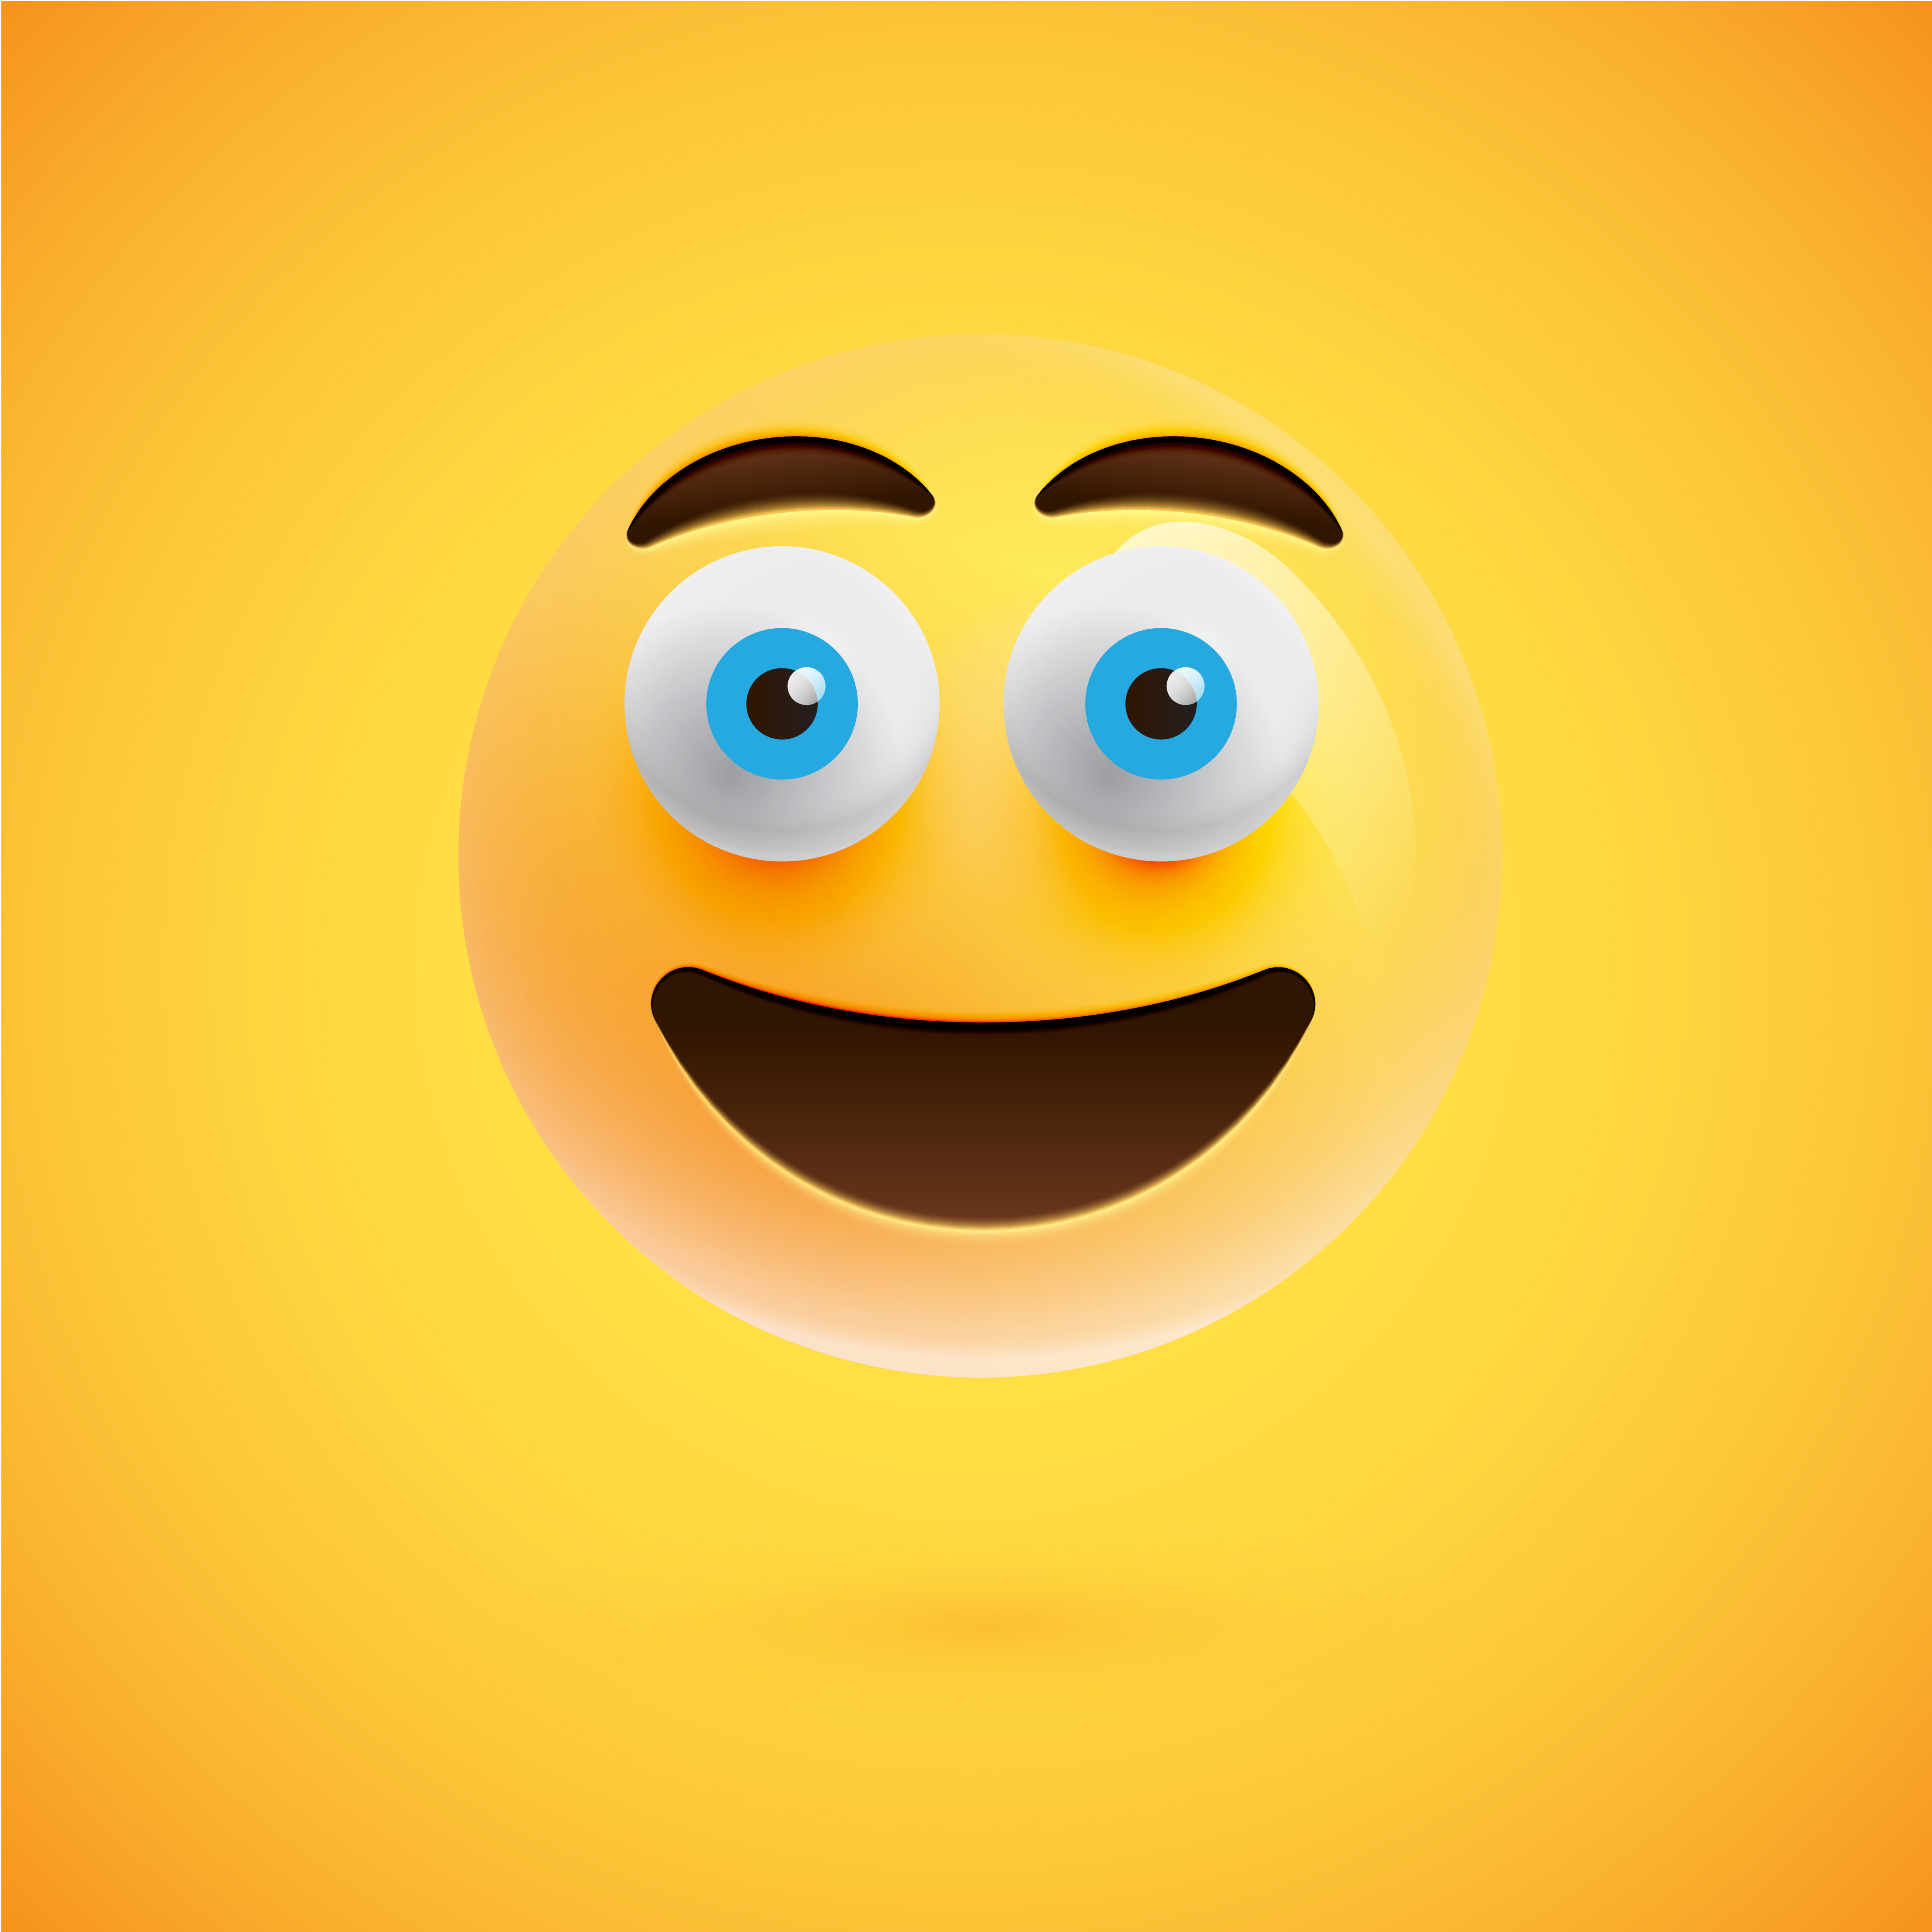 Yellow realistic emoticon smiley face, vector illustration